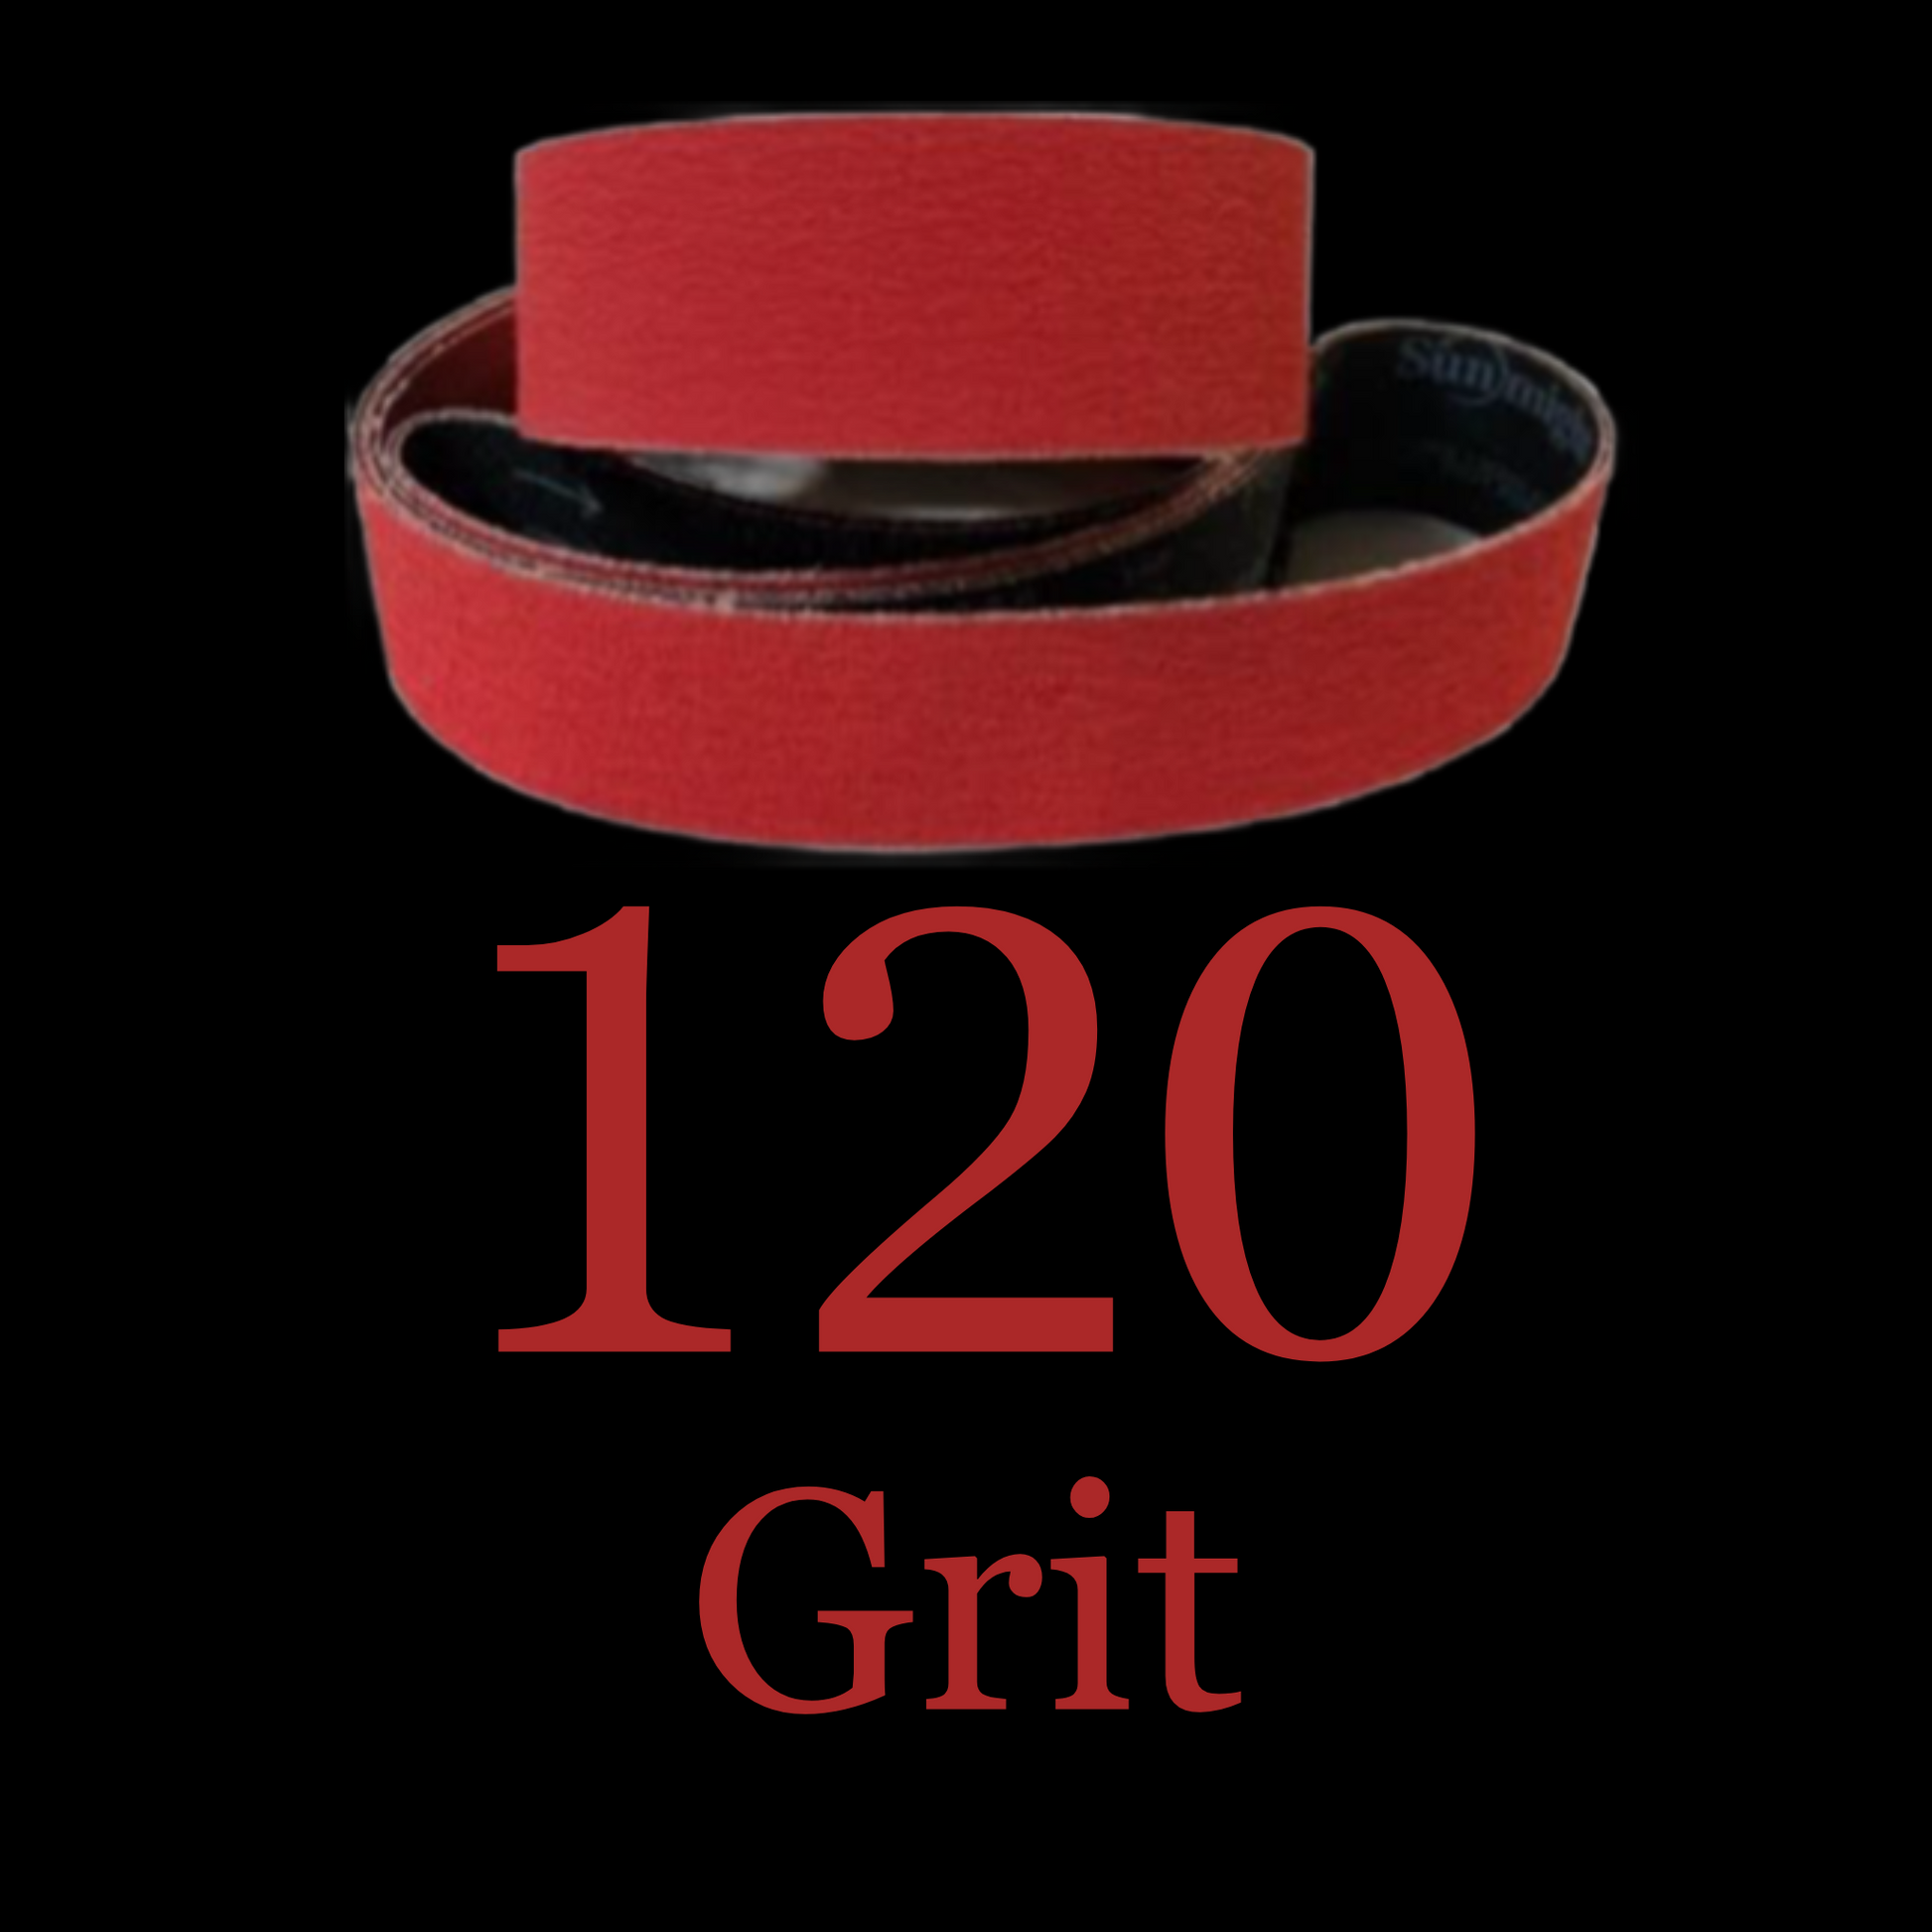 2” x 72” Metal Eater Premium Ceramic Belts 120 Grit